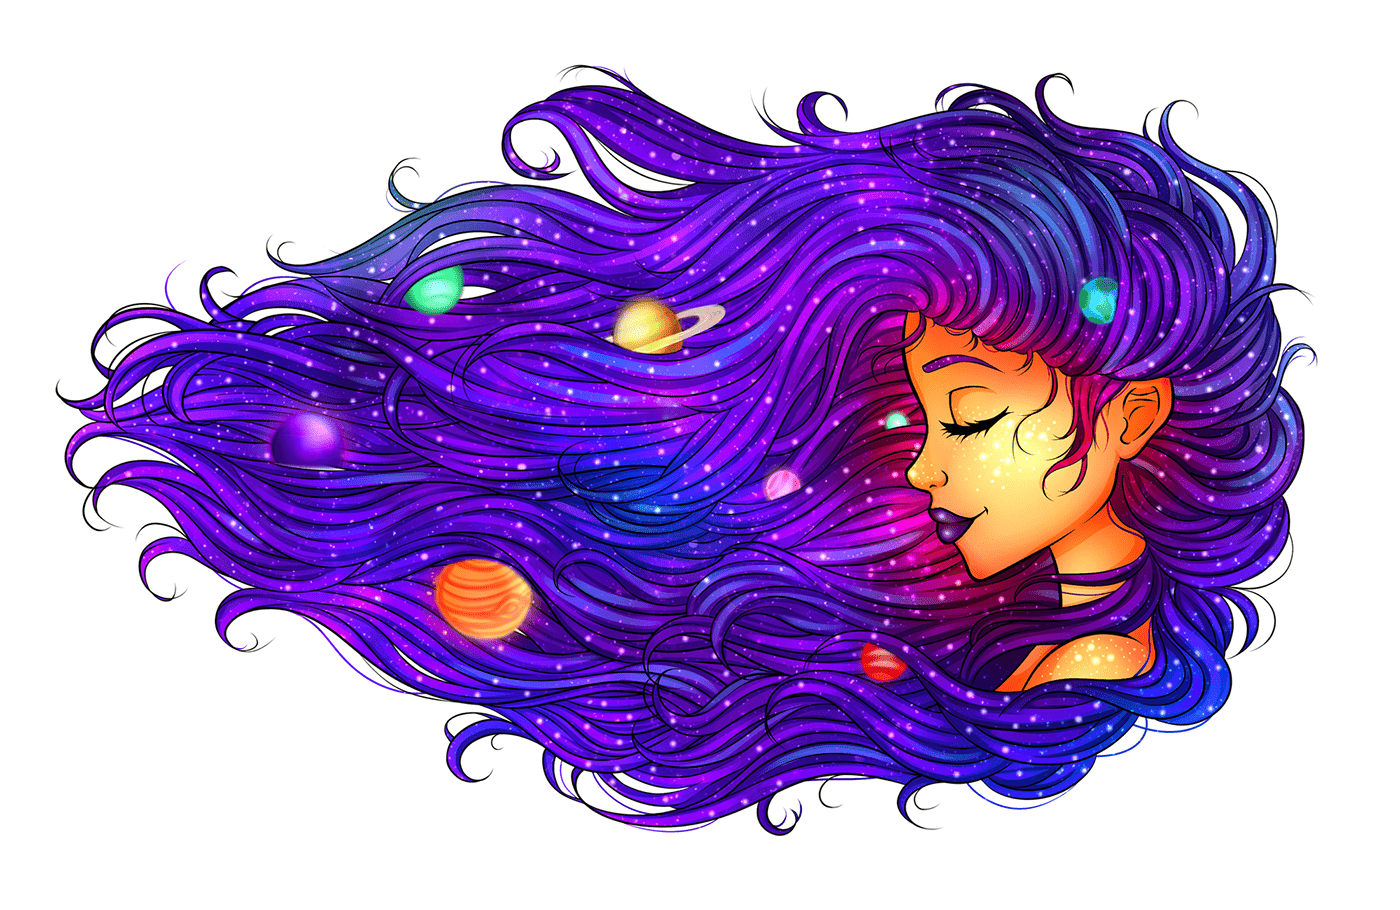 Digital Art  digital illustration galaxies galaxy ILLUSTRATION  Space  bright colorful purple vibrant